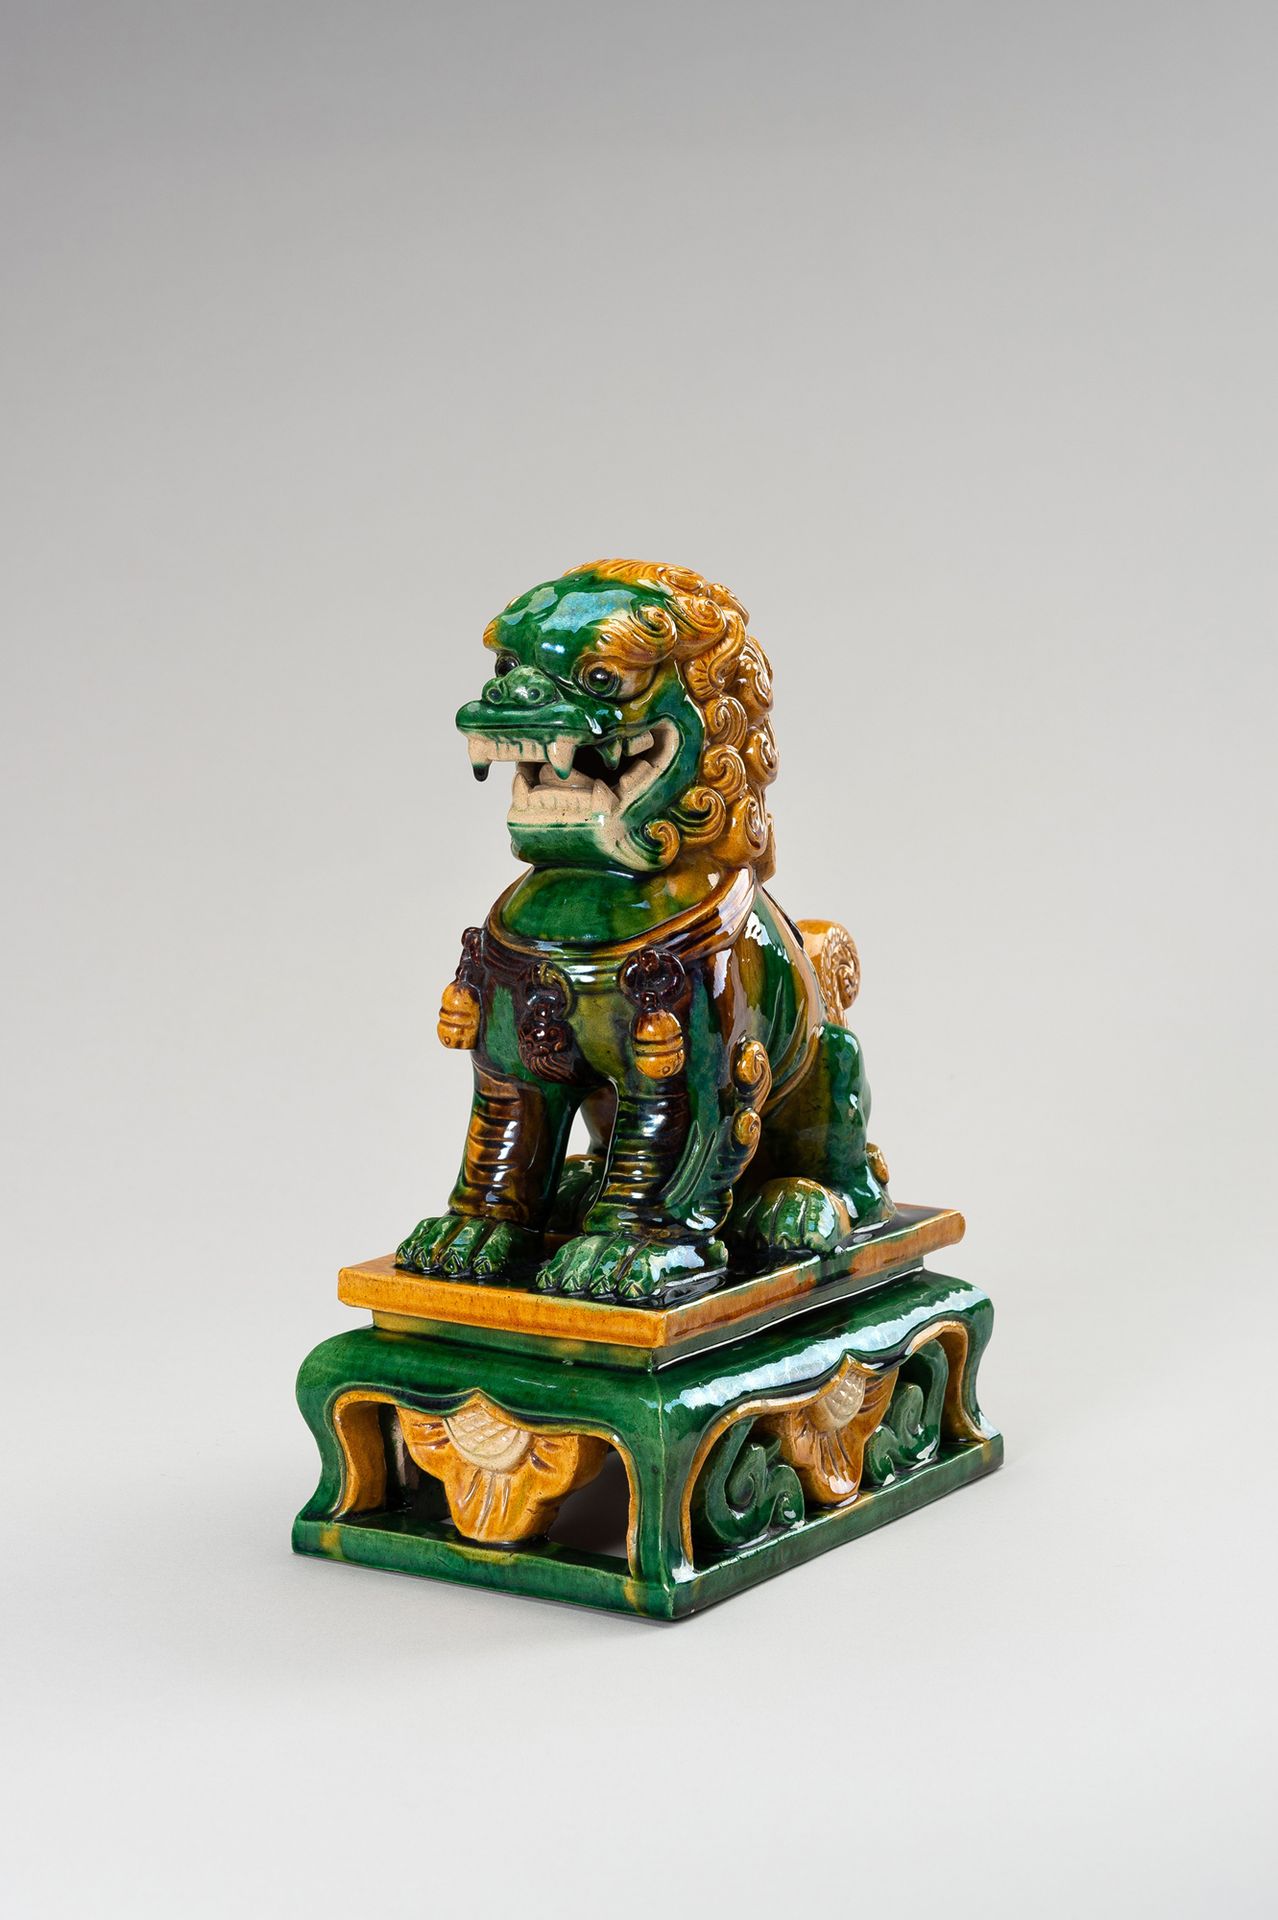 A SANCAI-GLAZED FIGURE OF A GUARDIAN LION 三彩釉雕狮子像
中国，清末（1644-1912）至民国时期（1912-194&hellip;